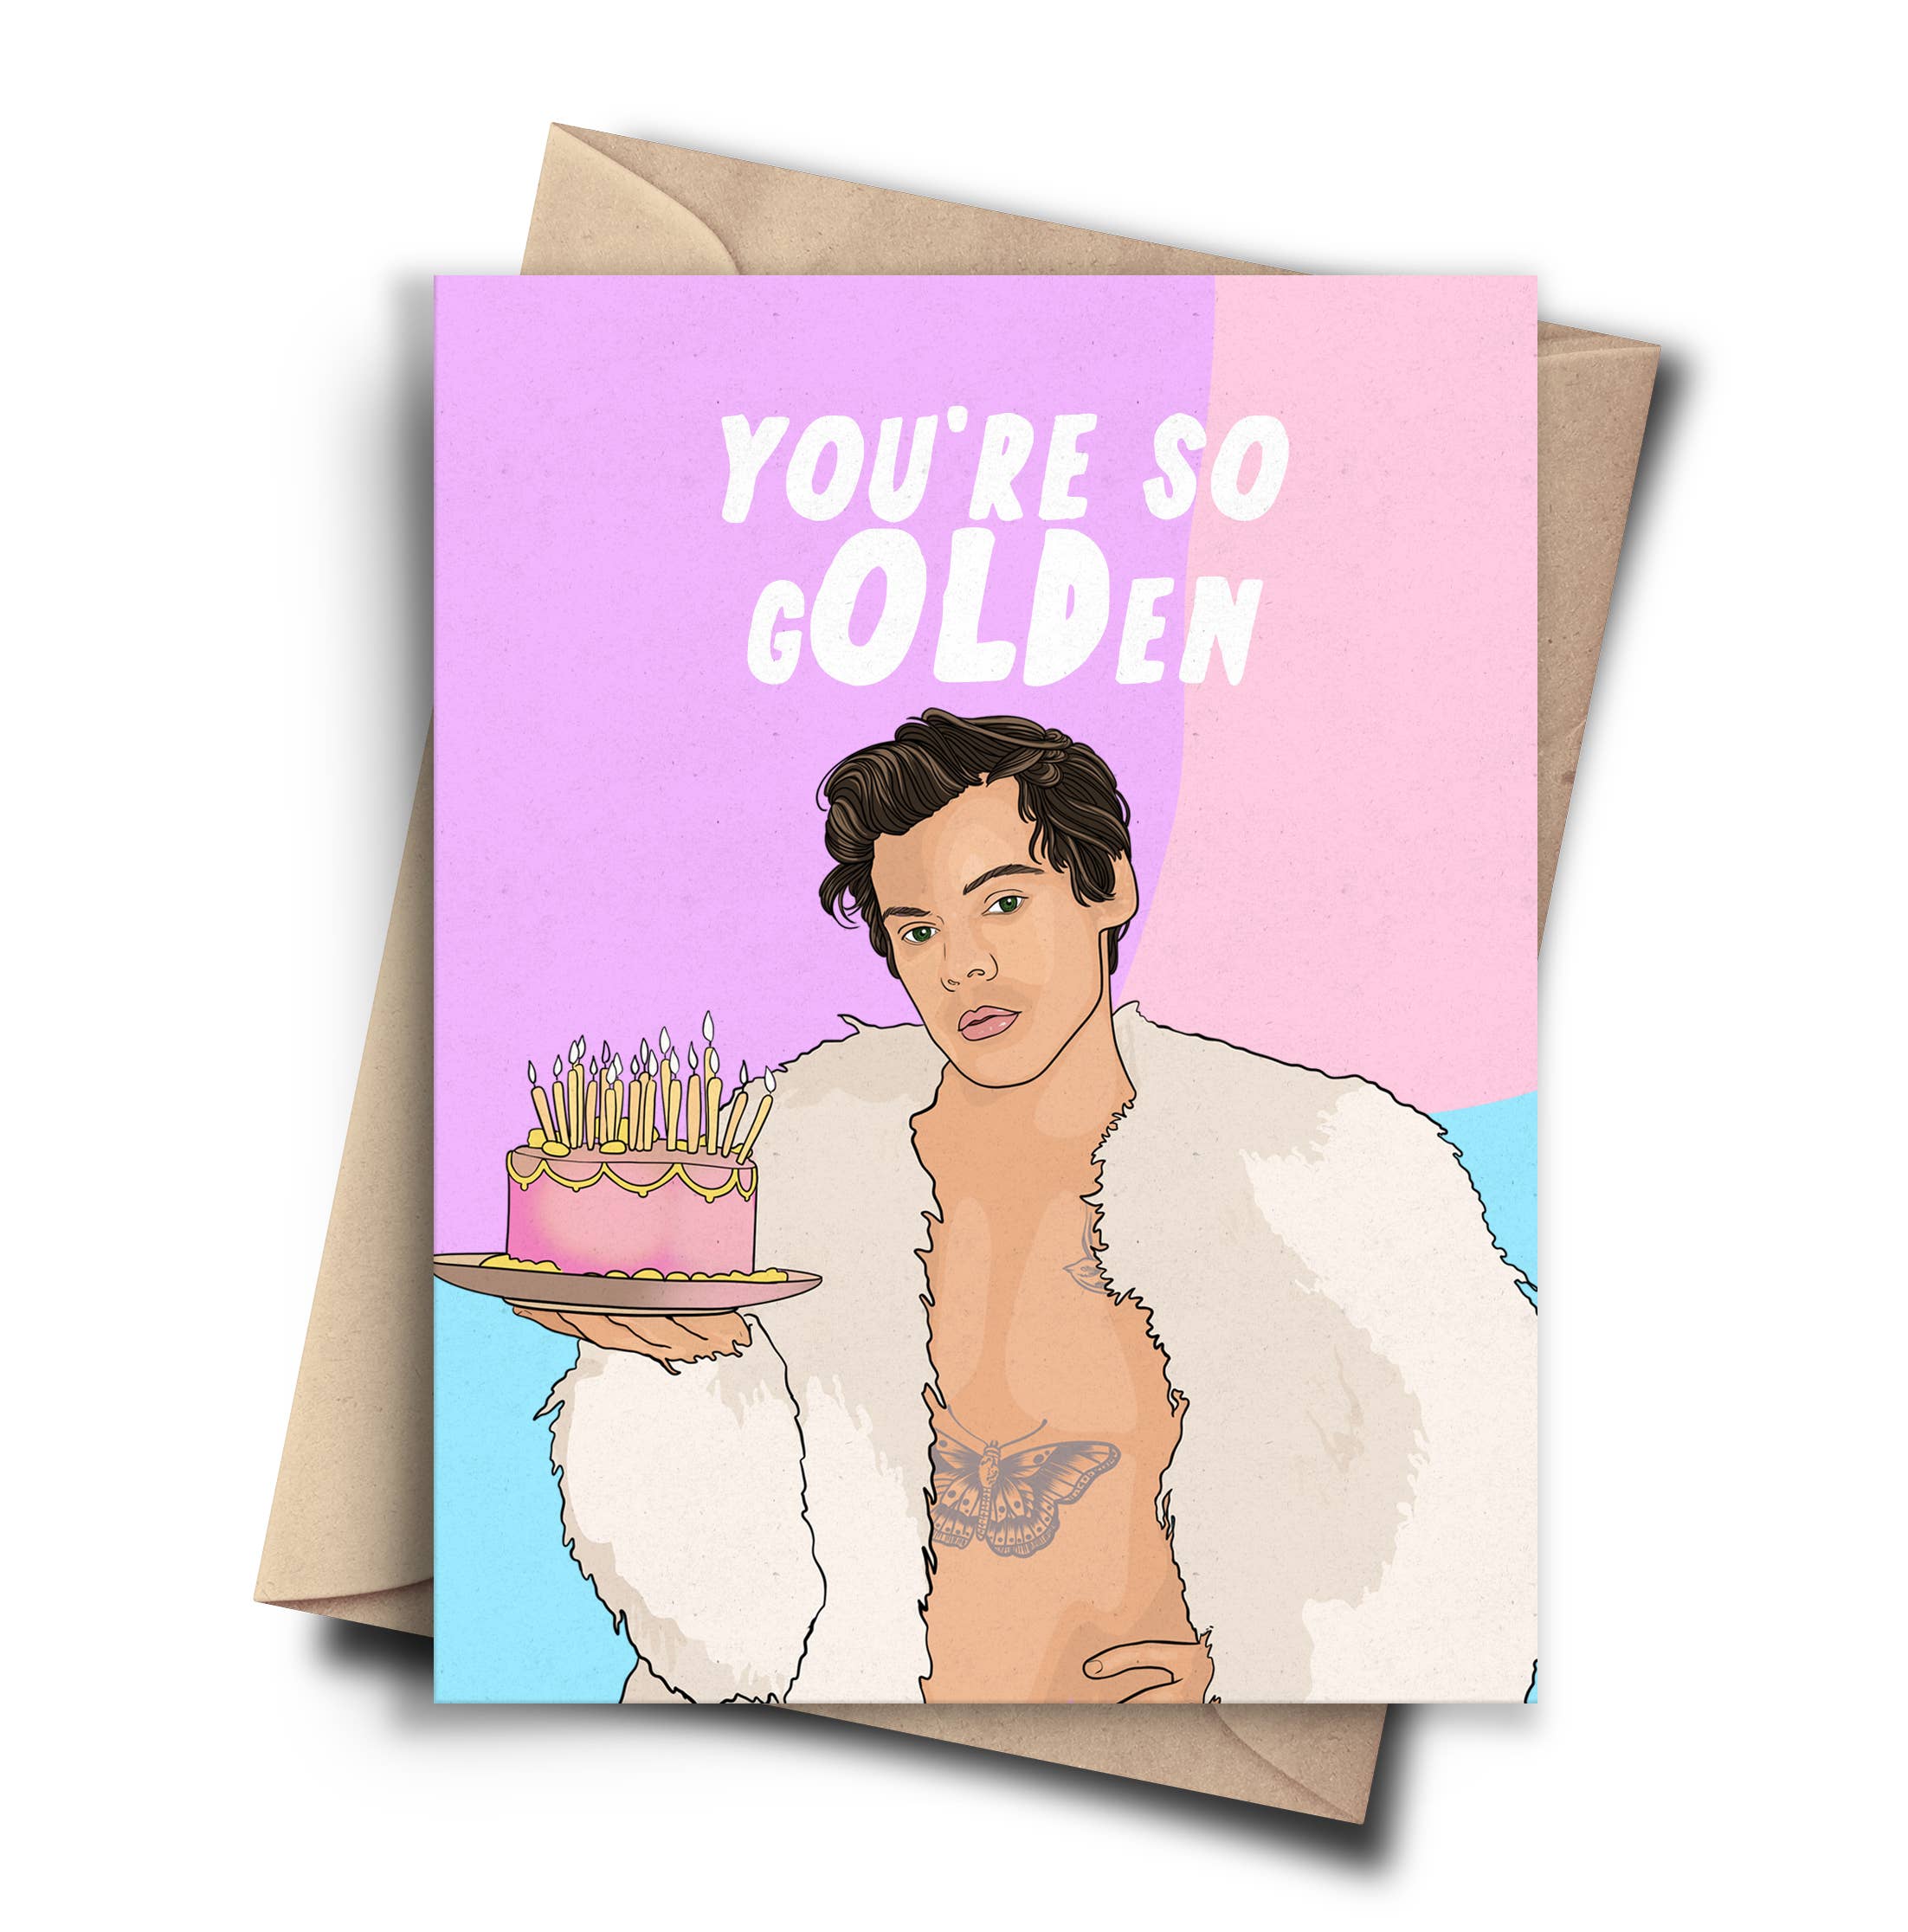 G(OLD)en Harry Styles Funny Birthday Card - Pop Culture Bday